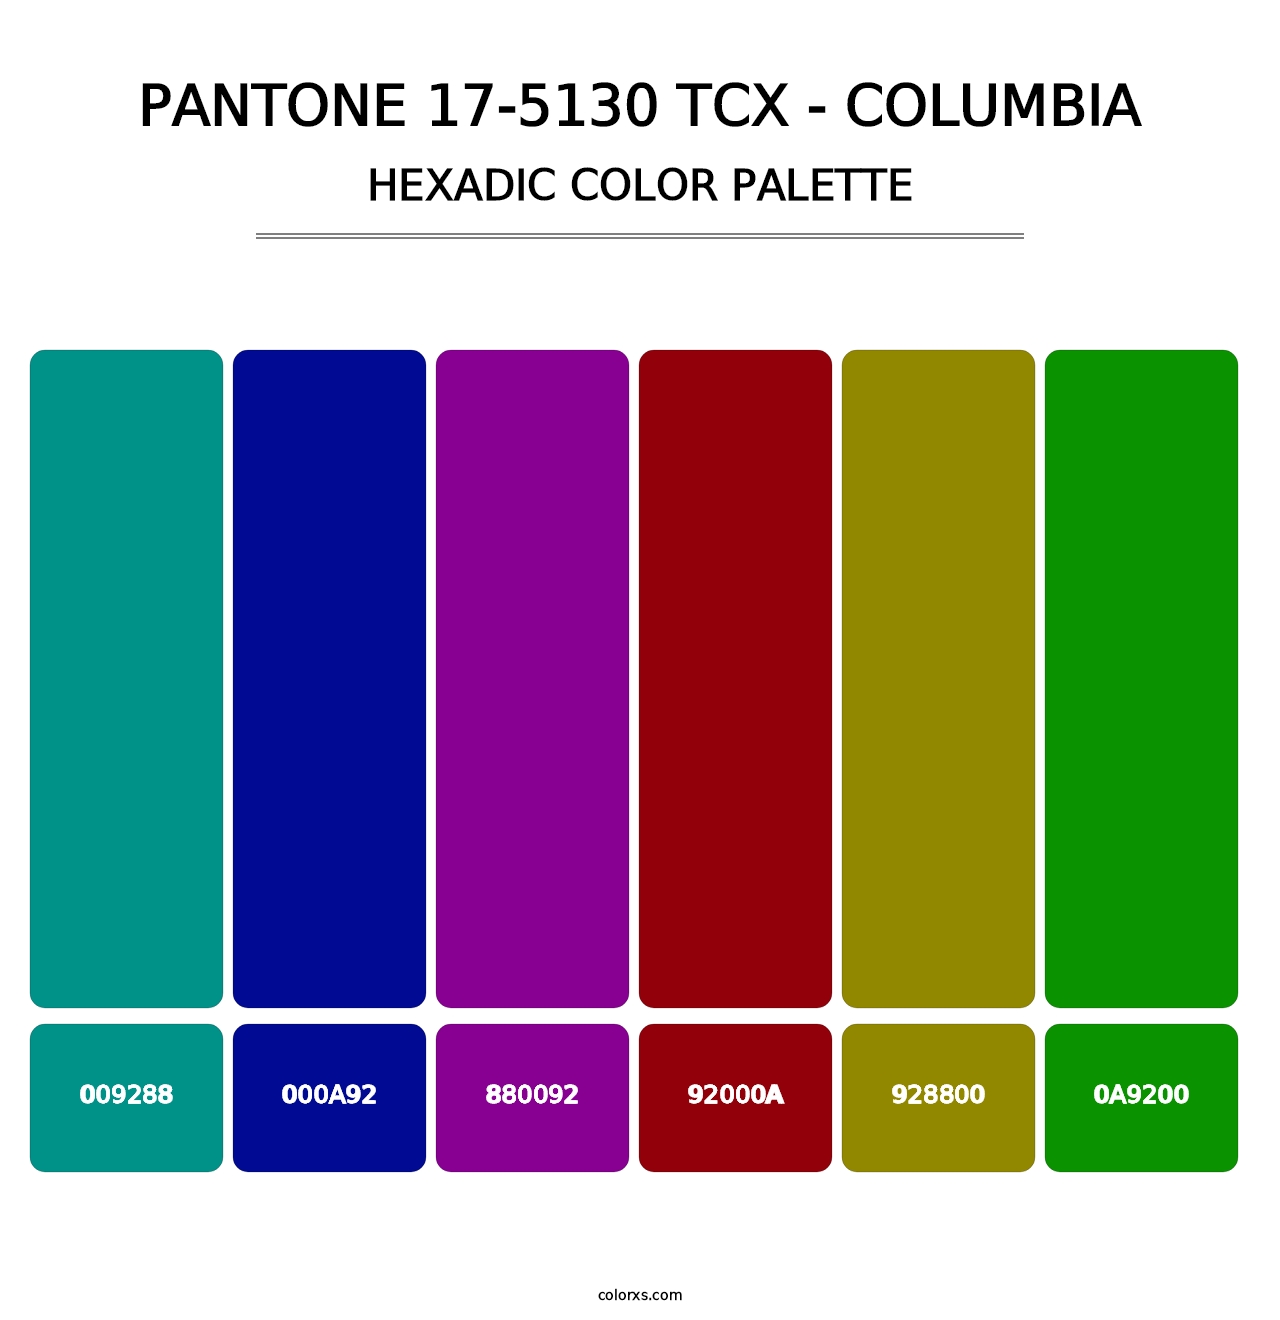 PANTONE 17-5130 TCX - Columbia - Hexadic Color Palette